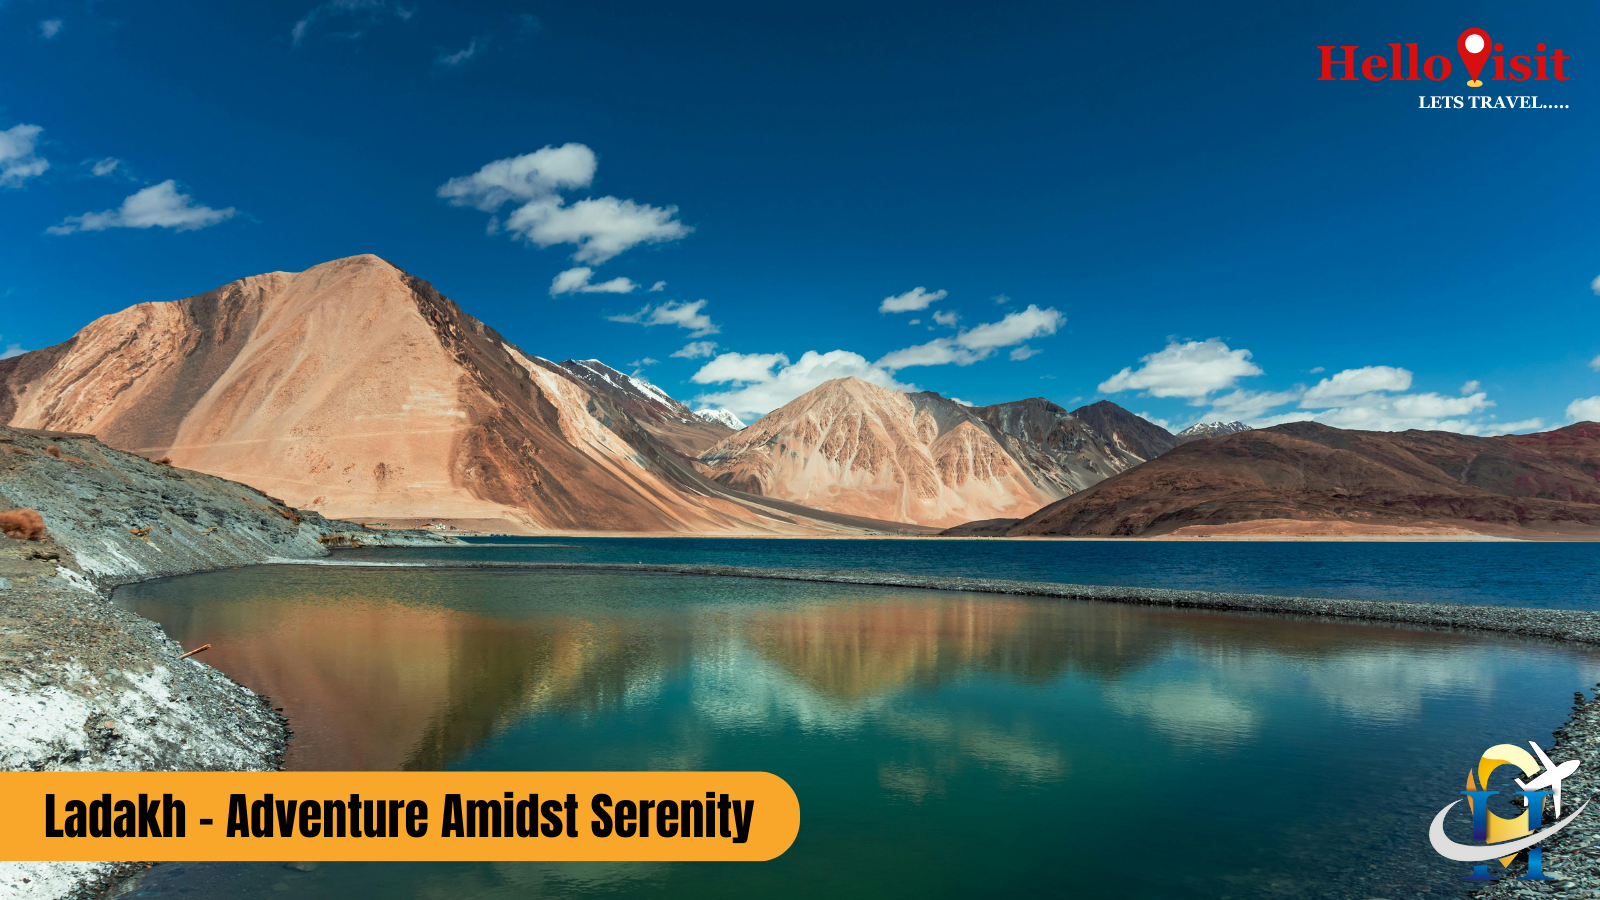 Ladakh - Adventure Amidst Serenity